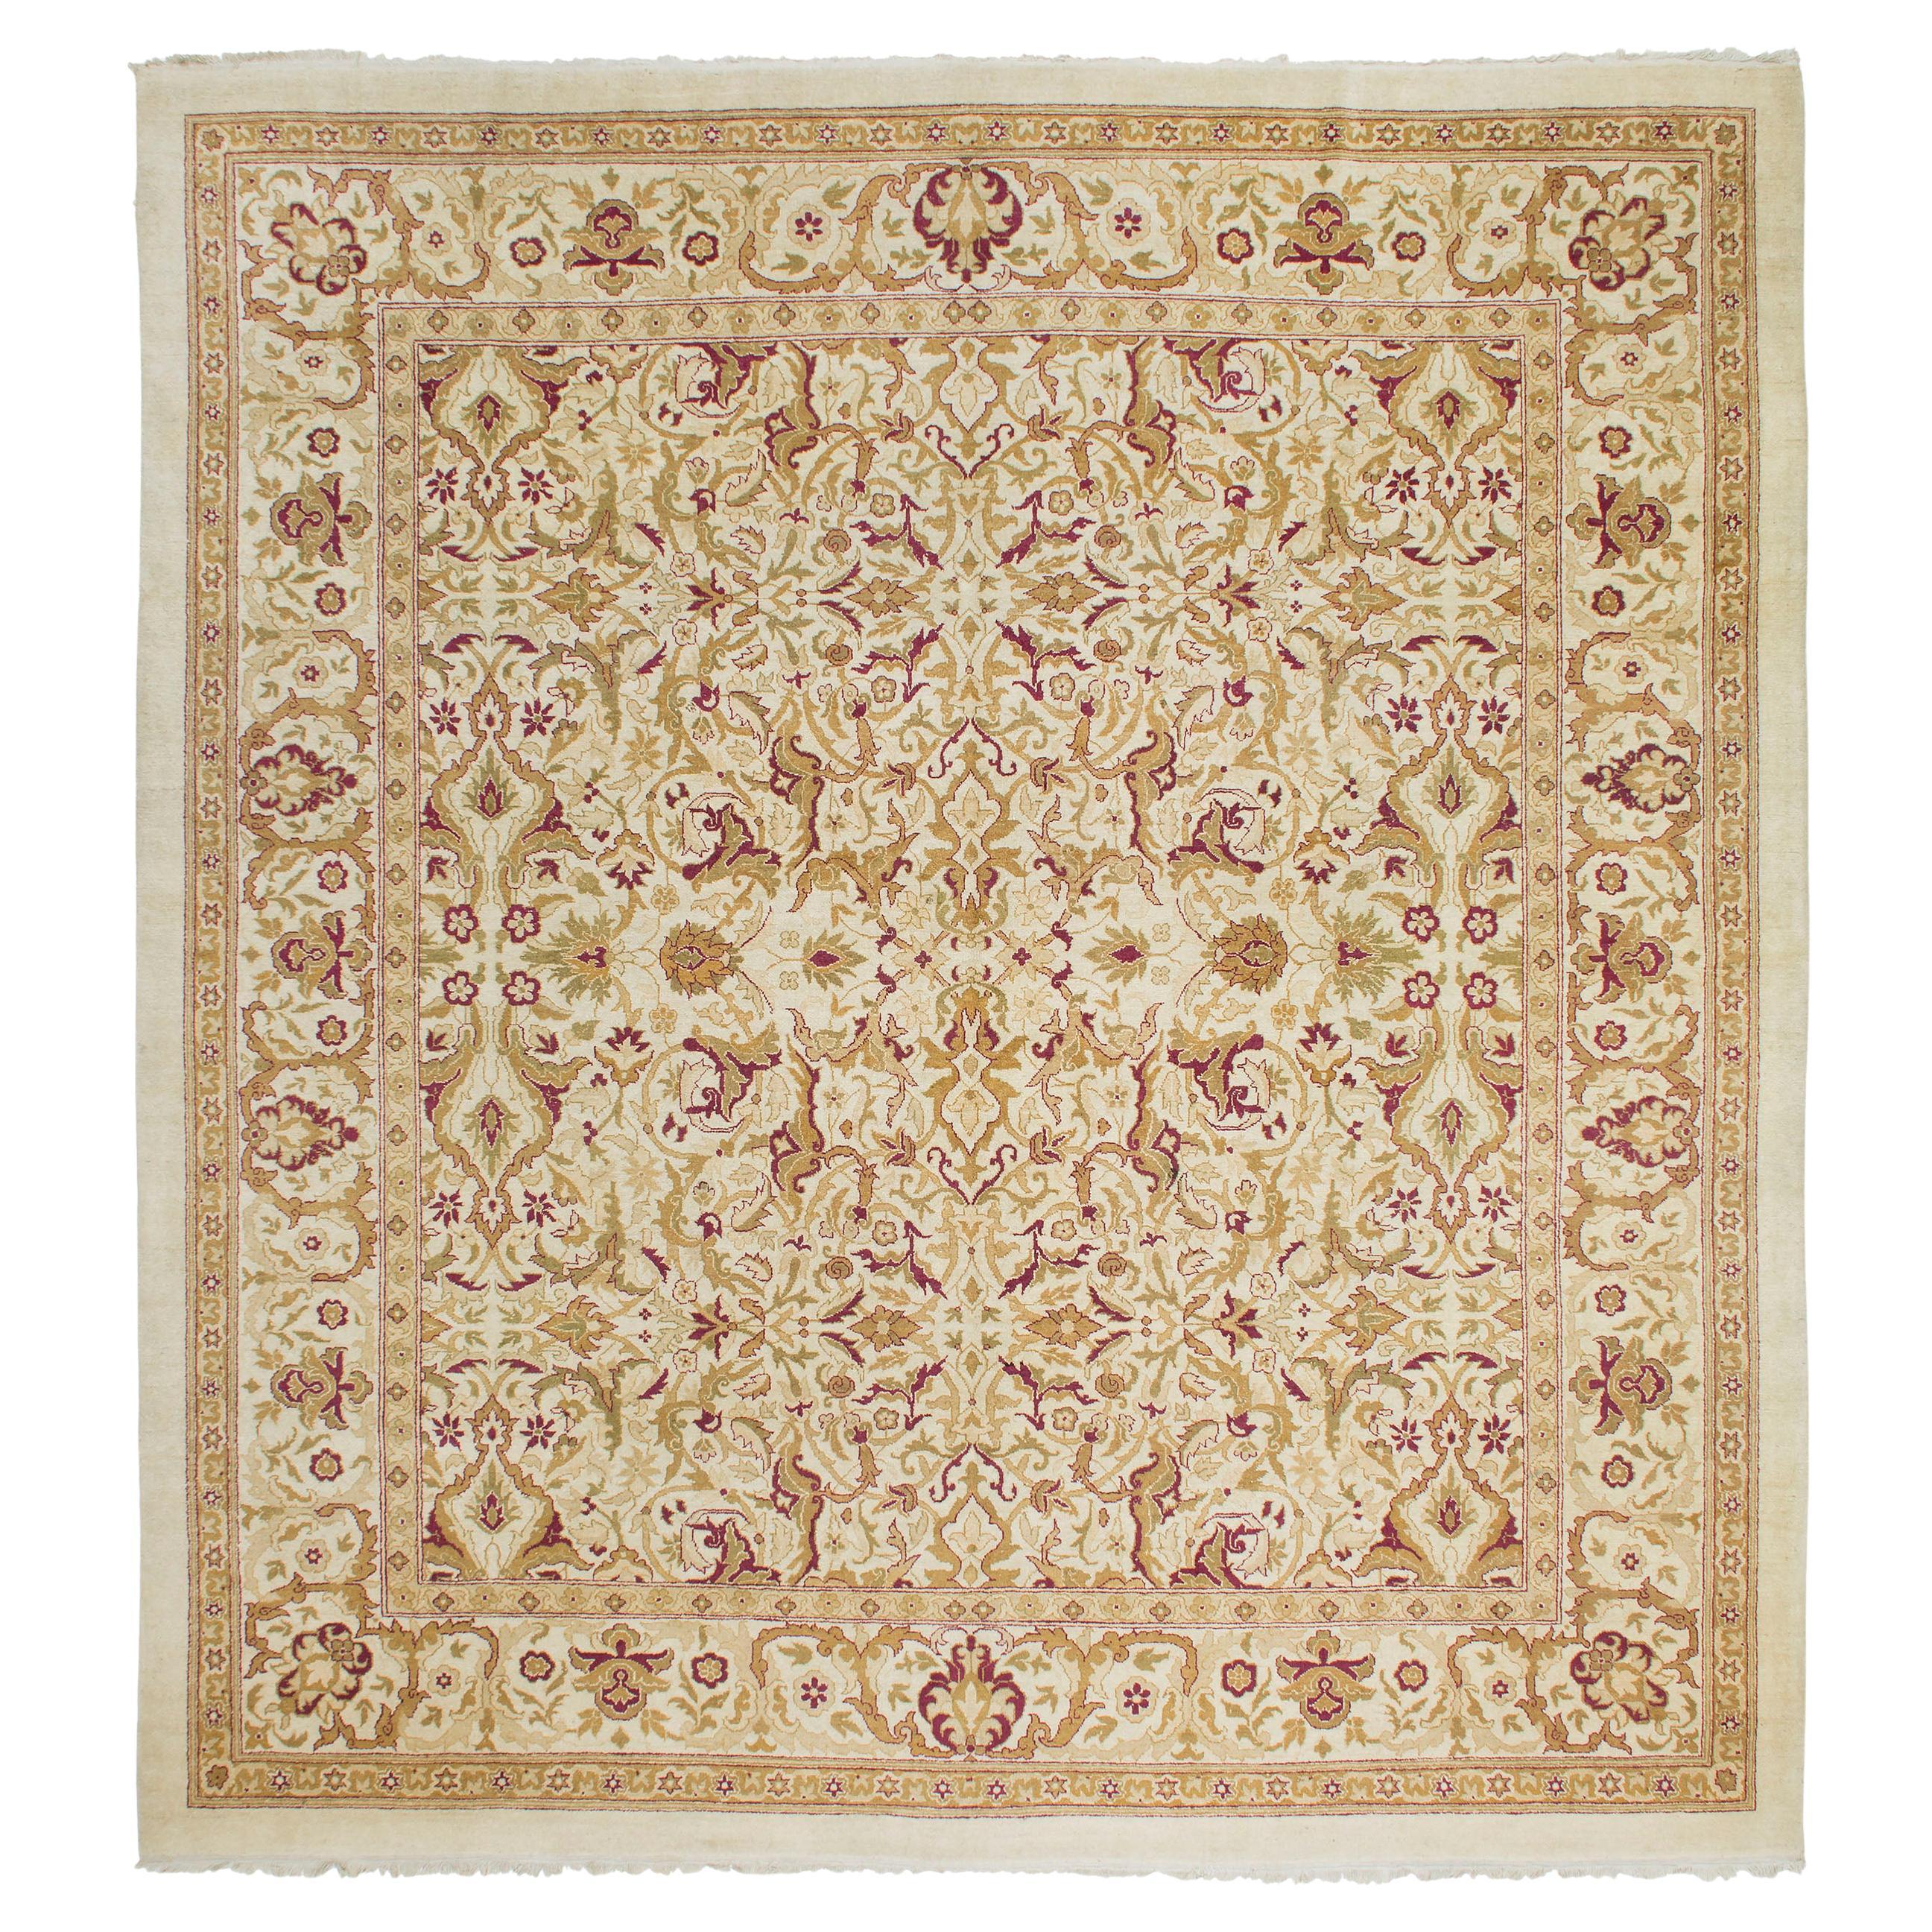 Antique Amritsar Carpet For Sale